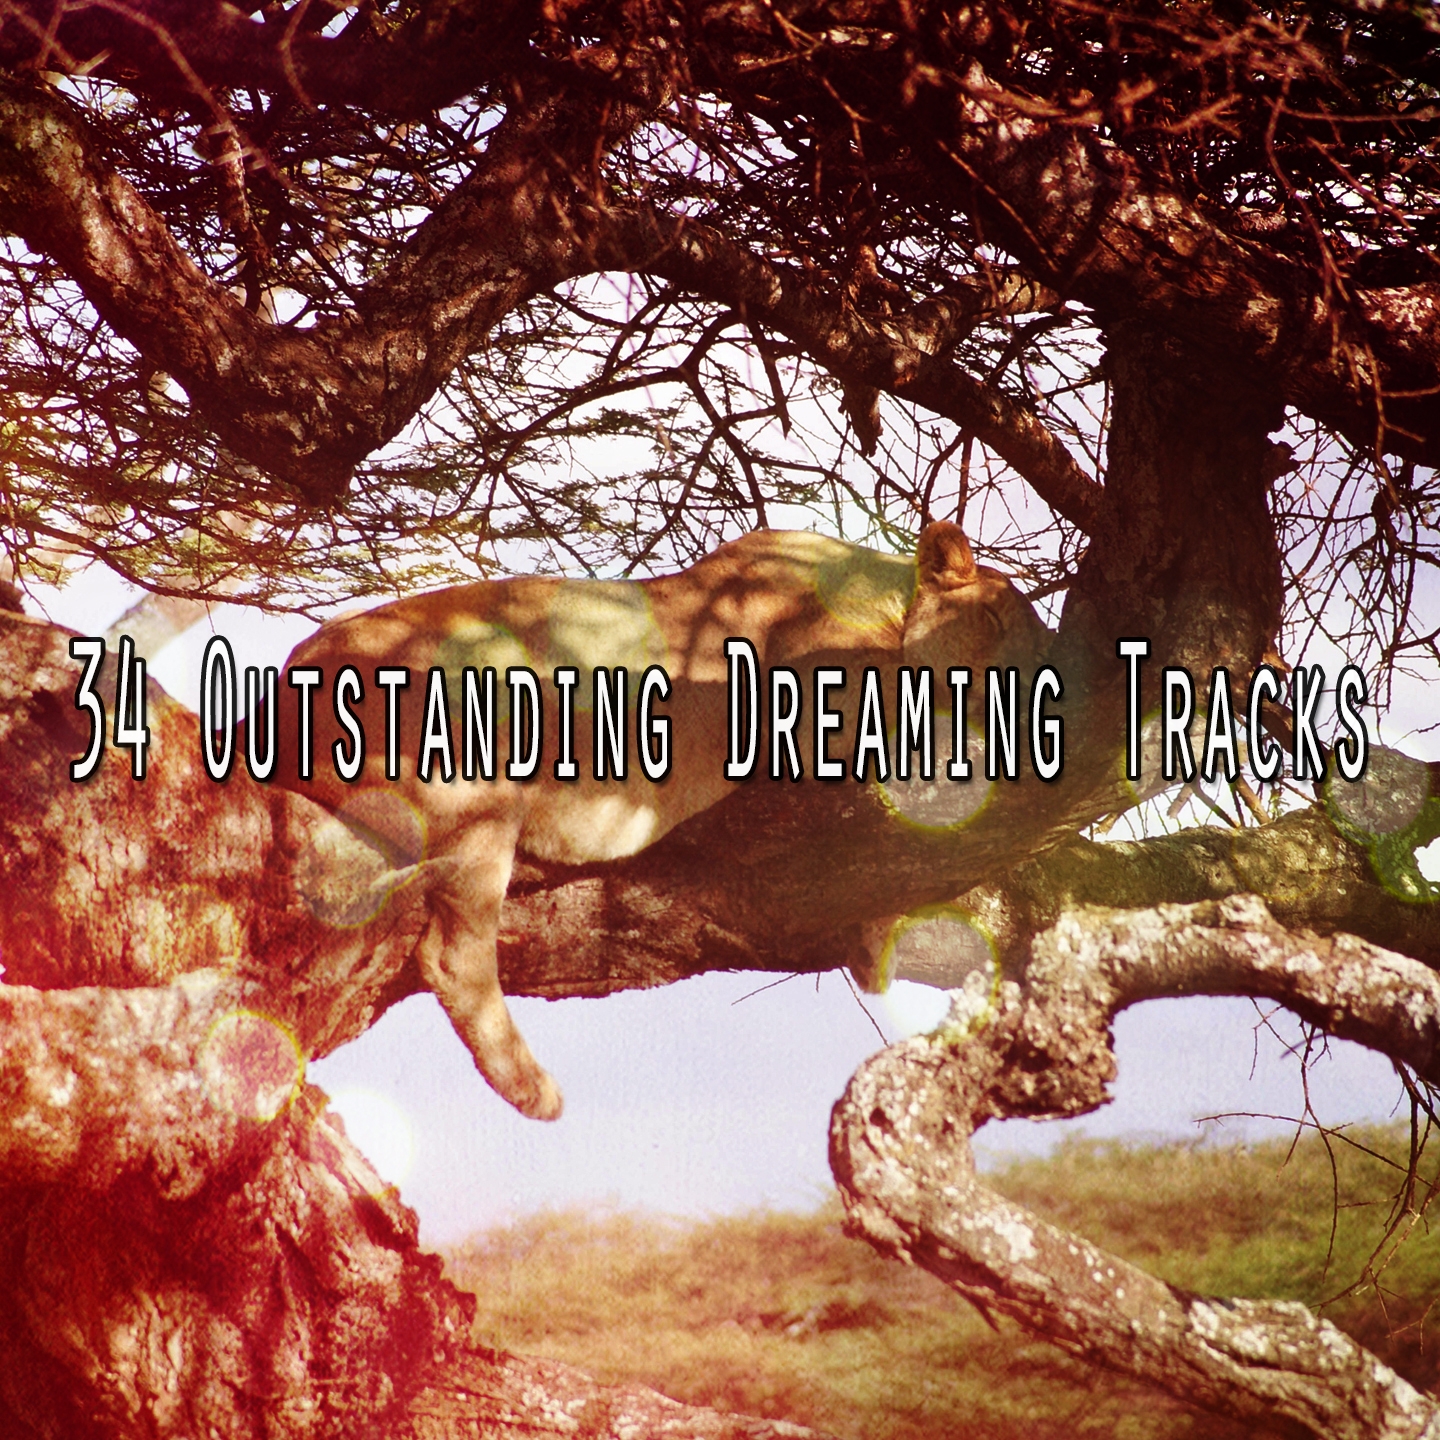 34 Outstanding Dreaming Tracks